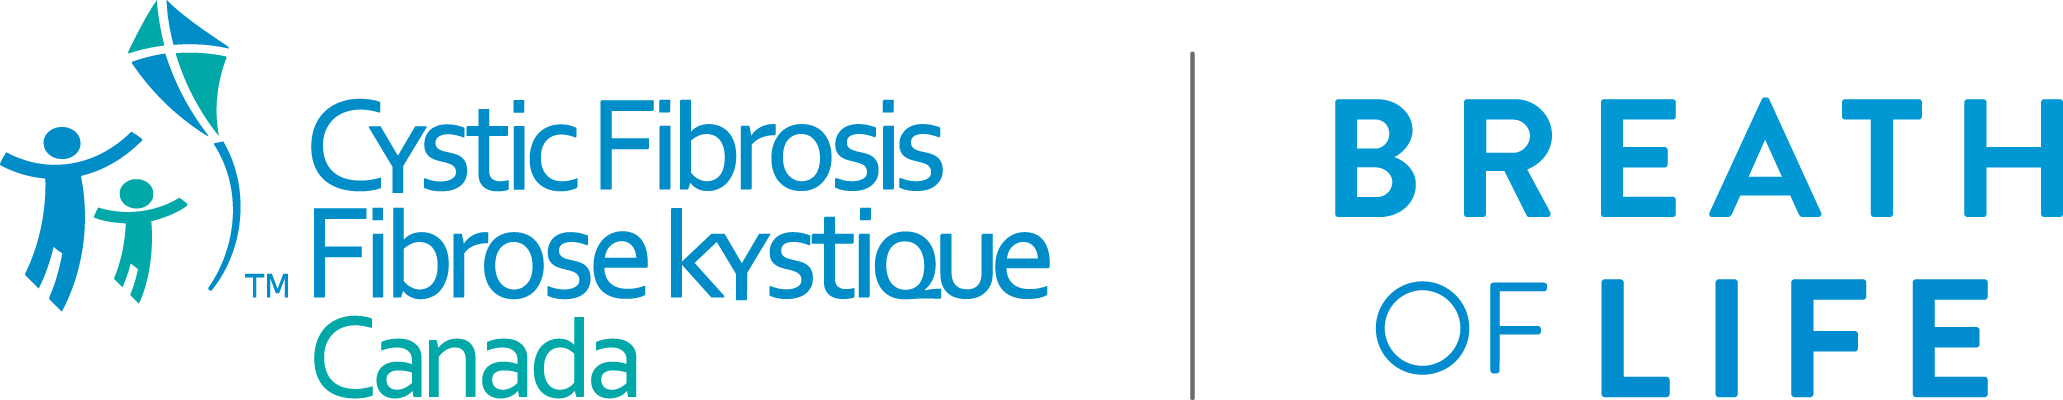 Cystic Fibrosis Canada Breathe of life logo